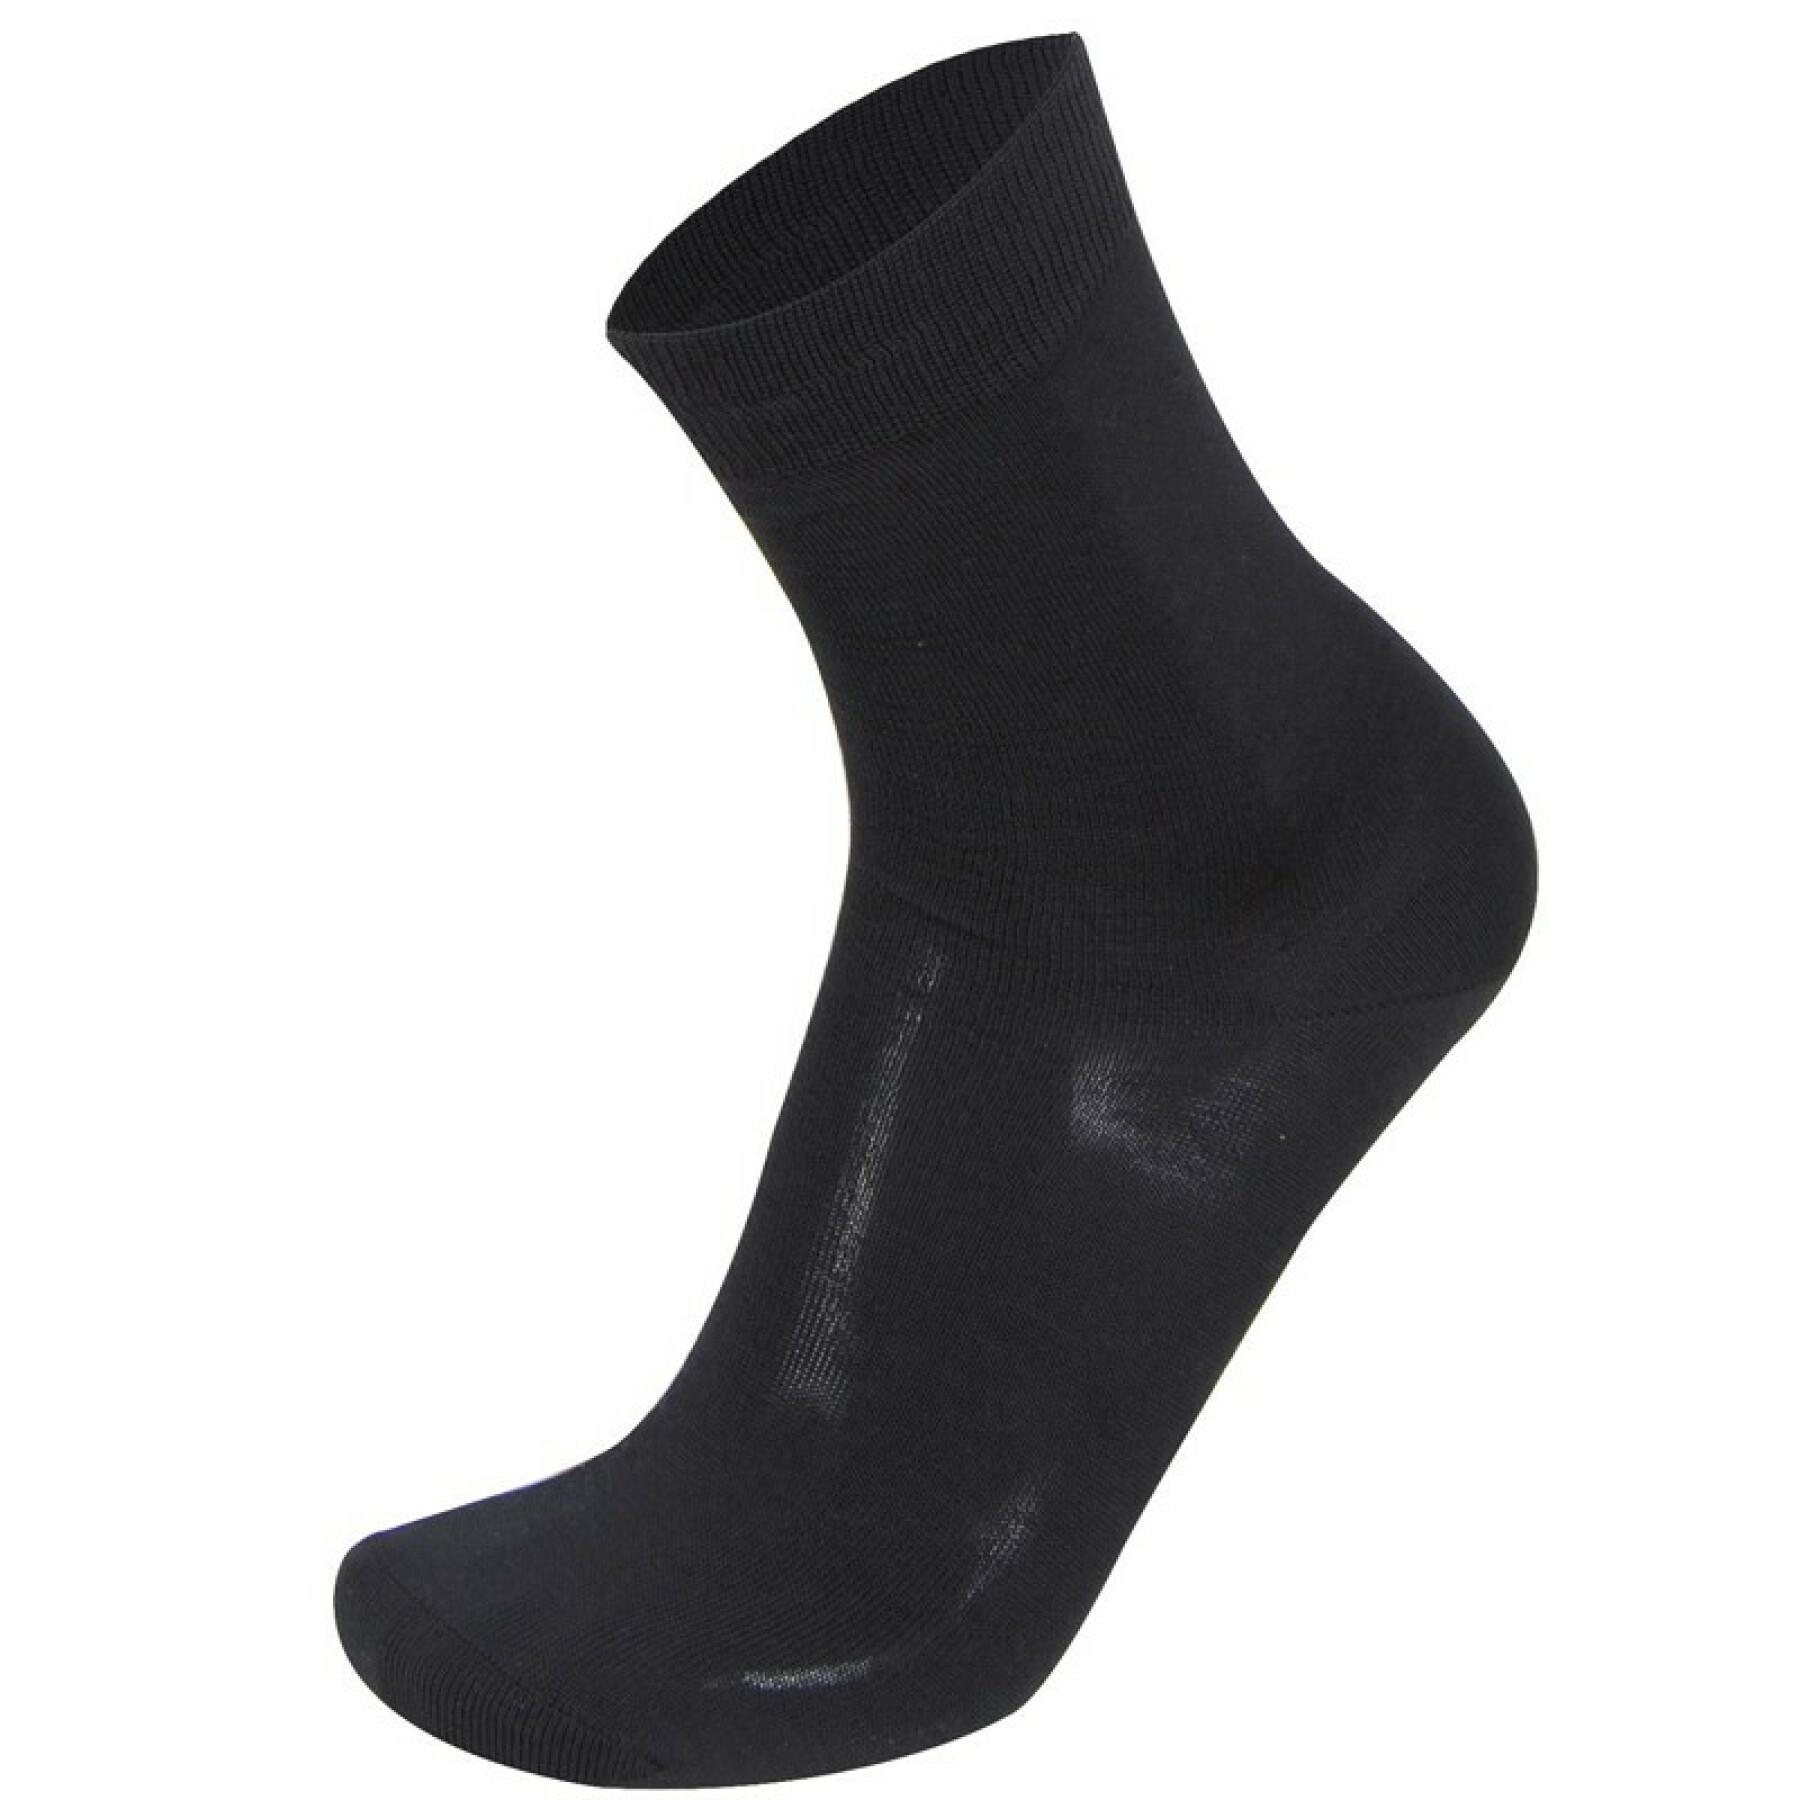 Silk socks Rywan